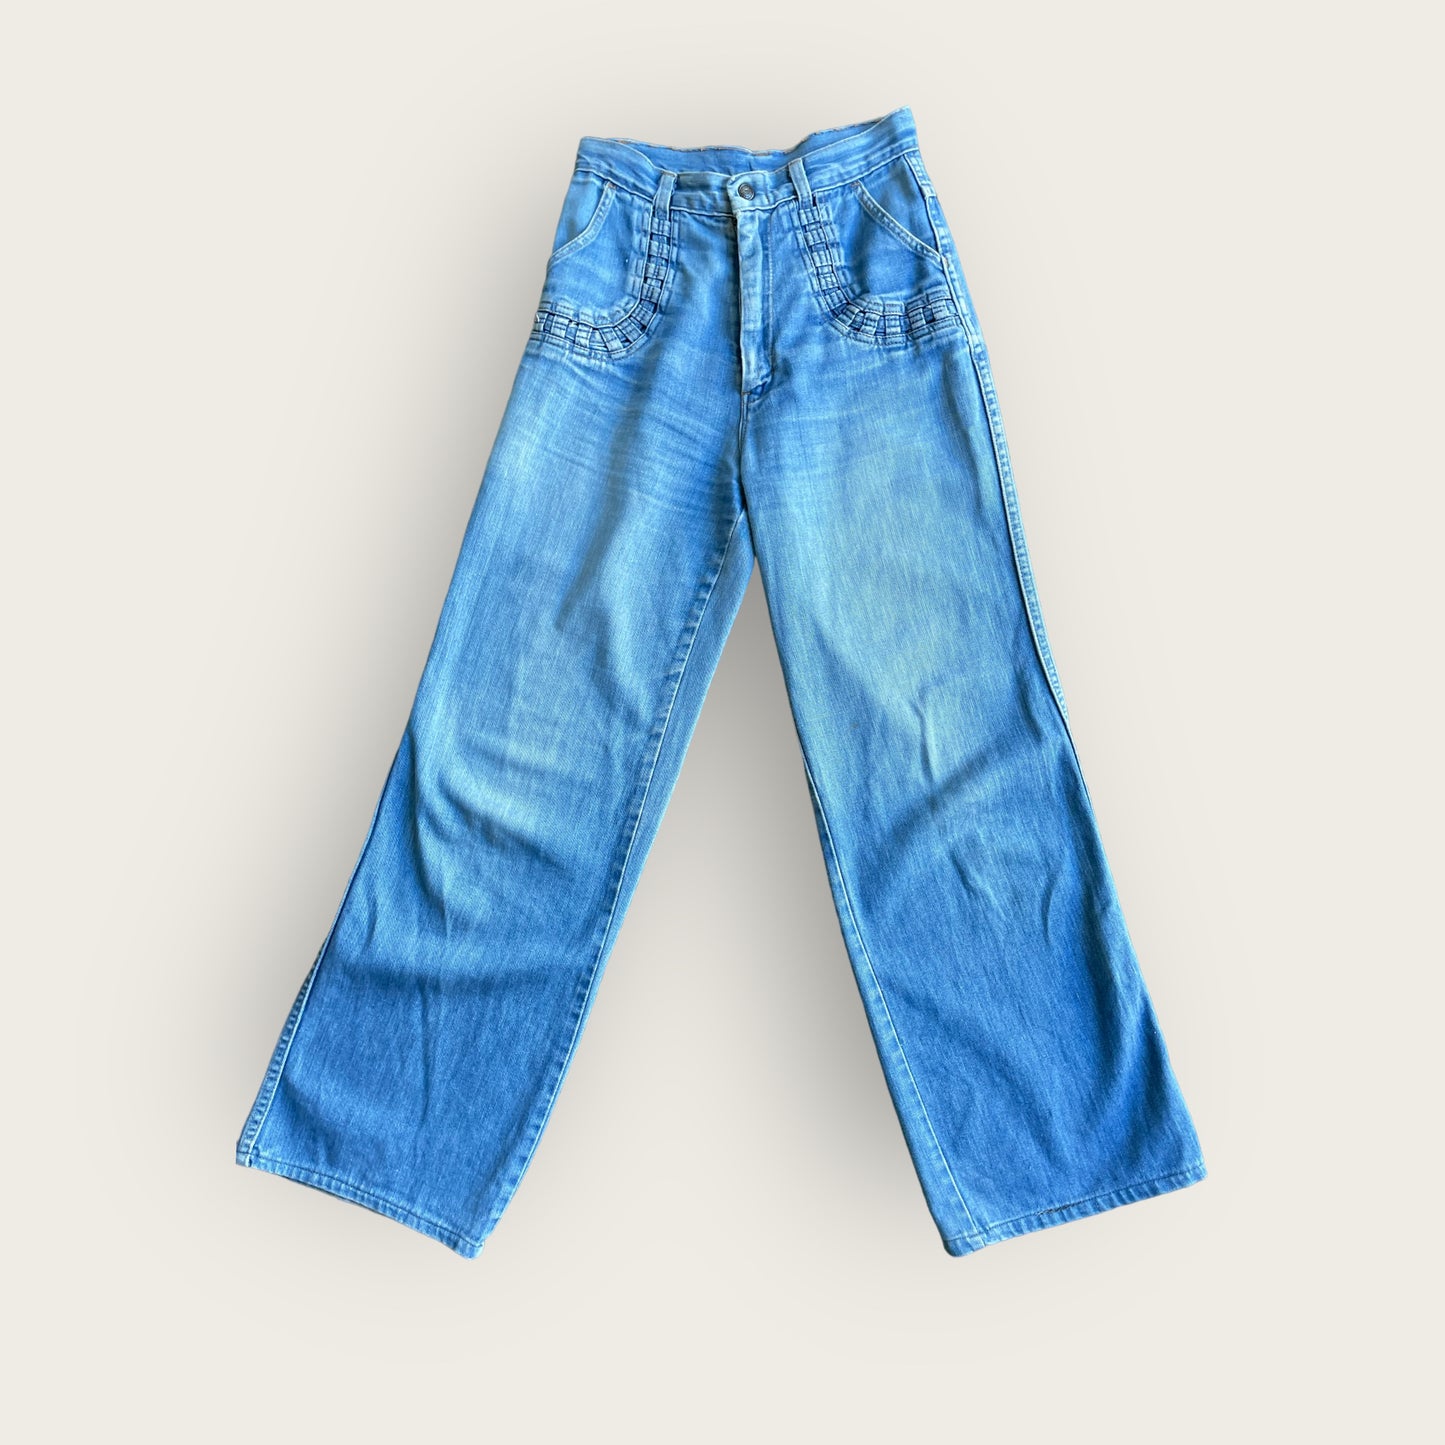 1970s slight flare jeans